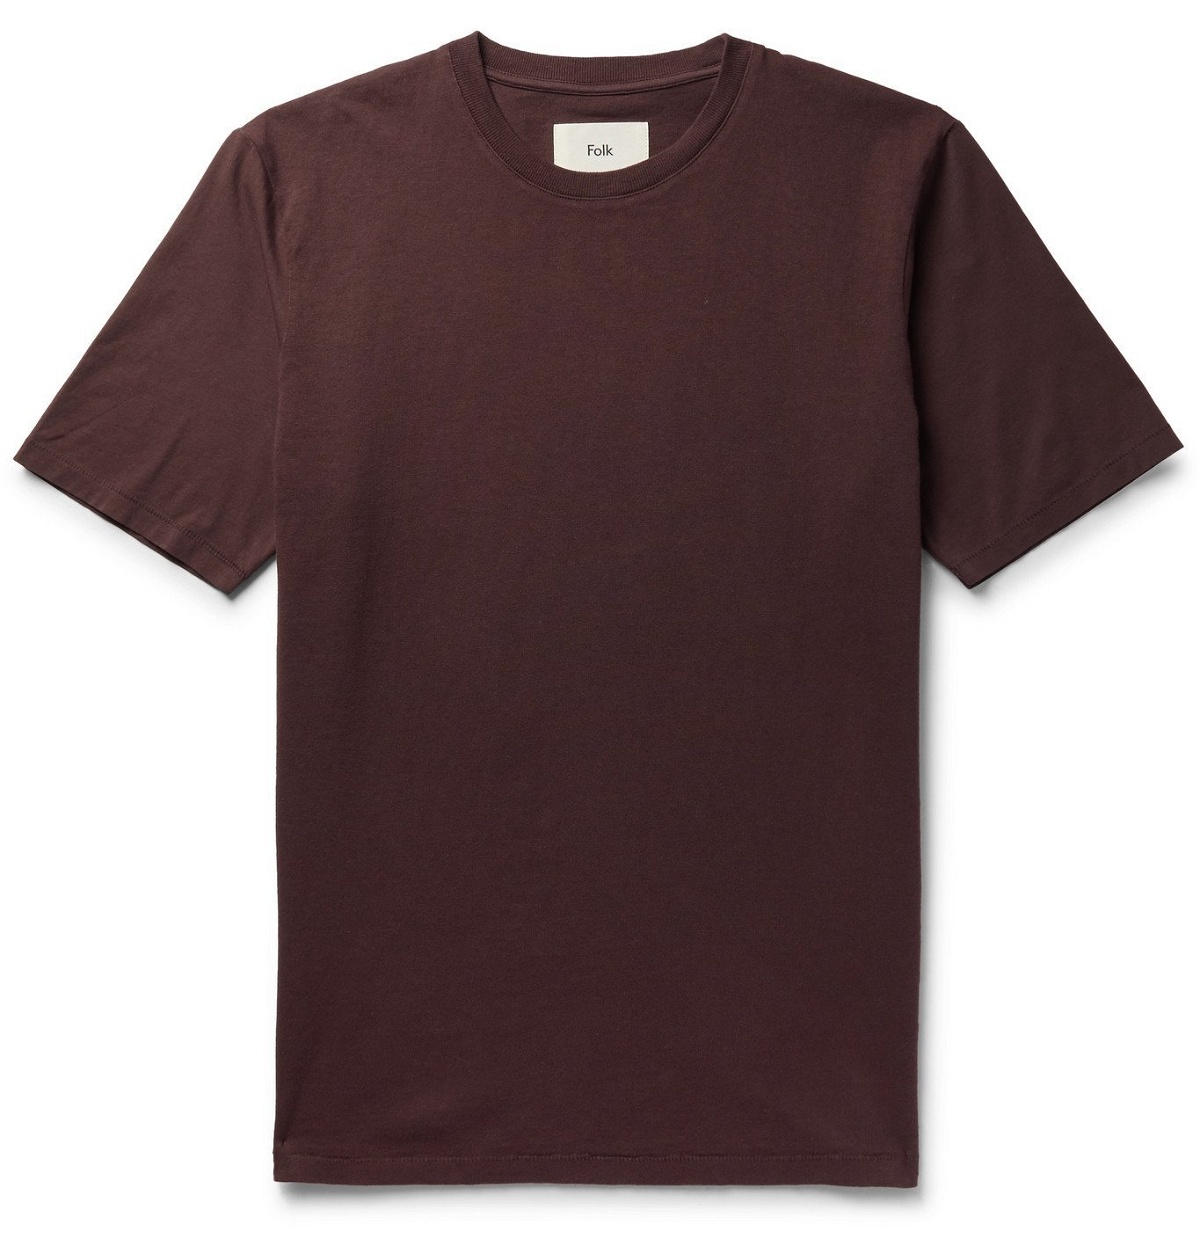 Folk - Garment-Dyed Cotton-Jersey T-Shirt - Burgundy Folk